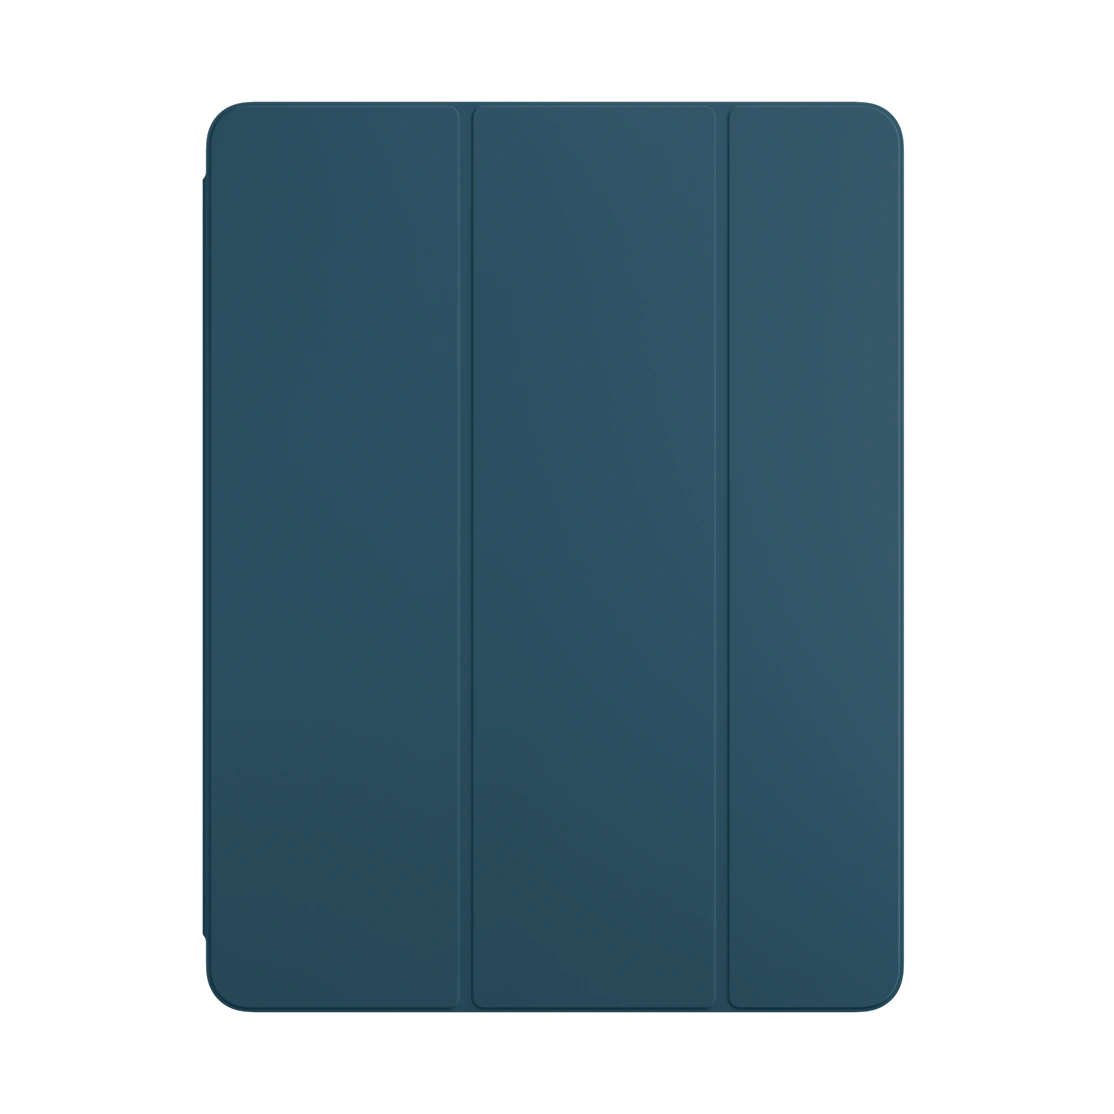 Apple Smart Folio for iPad Pro 12.9-inch